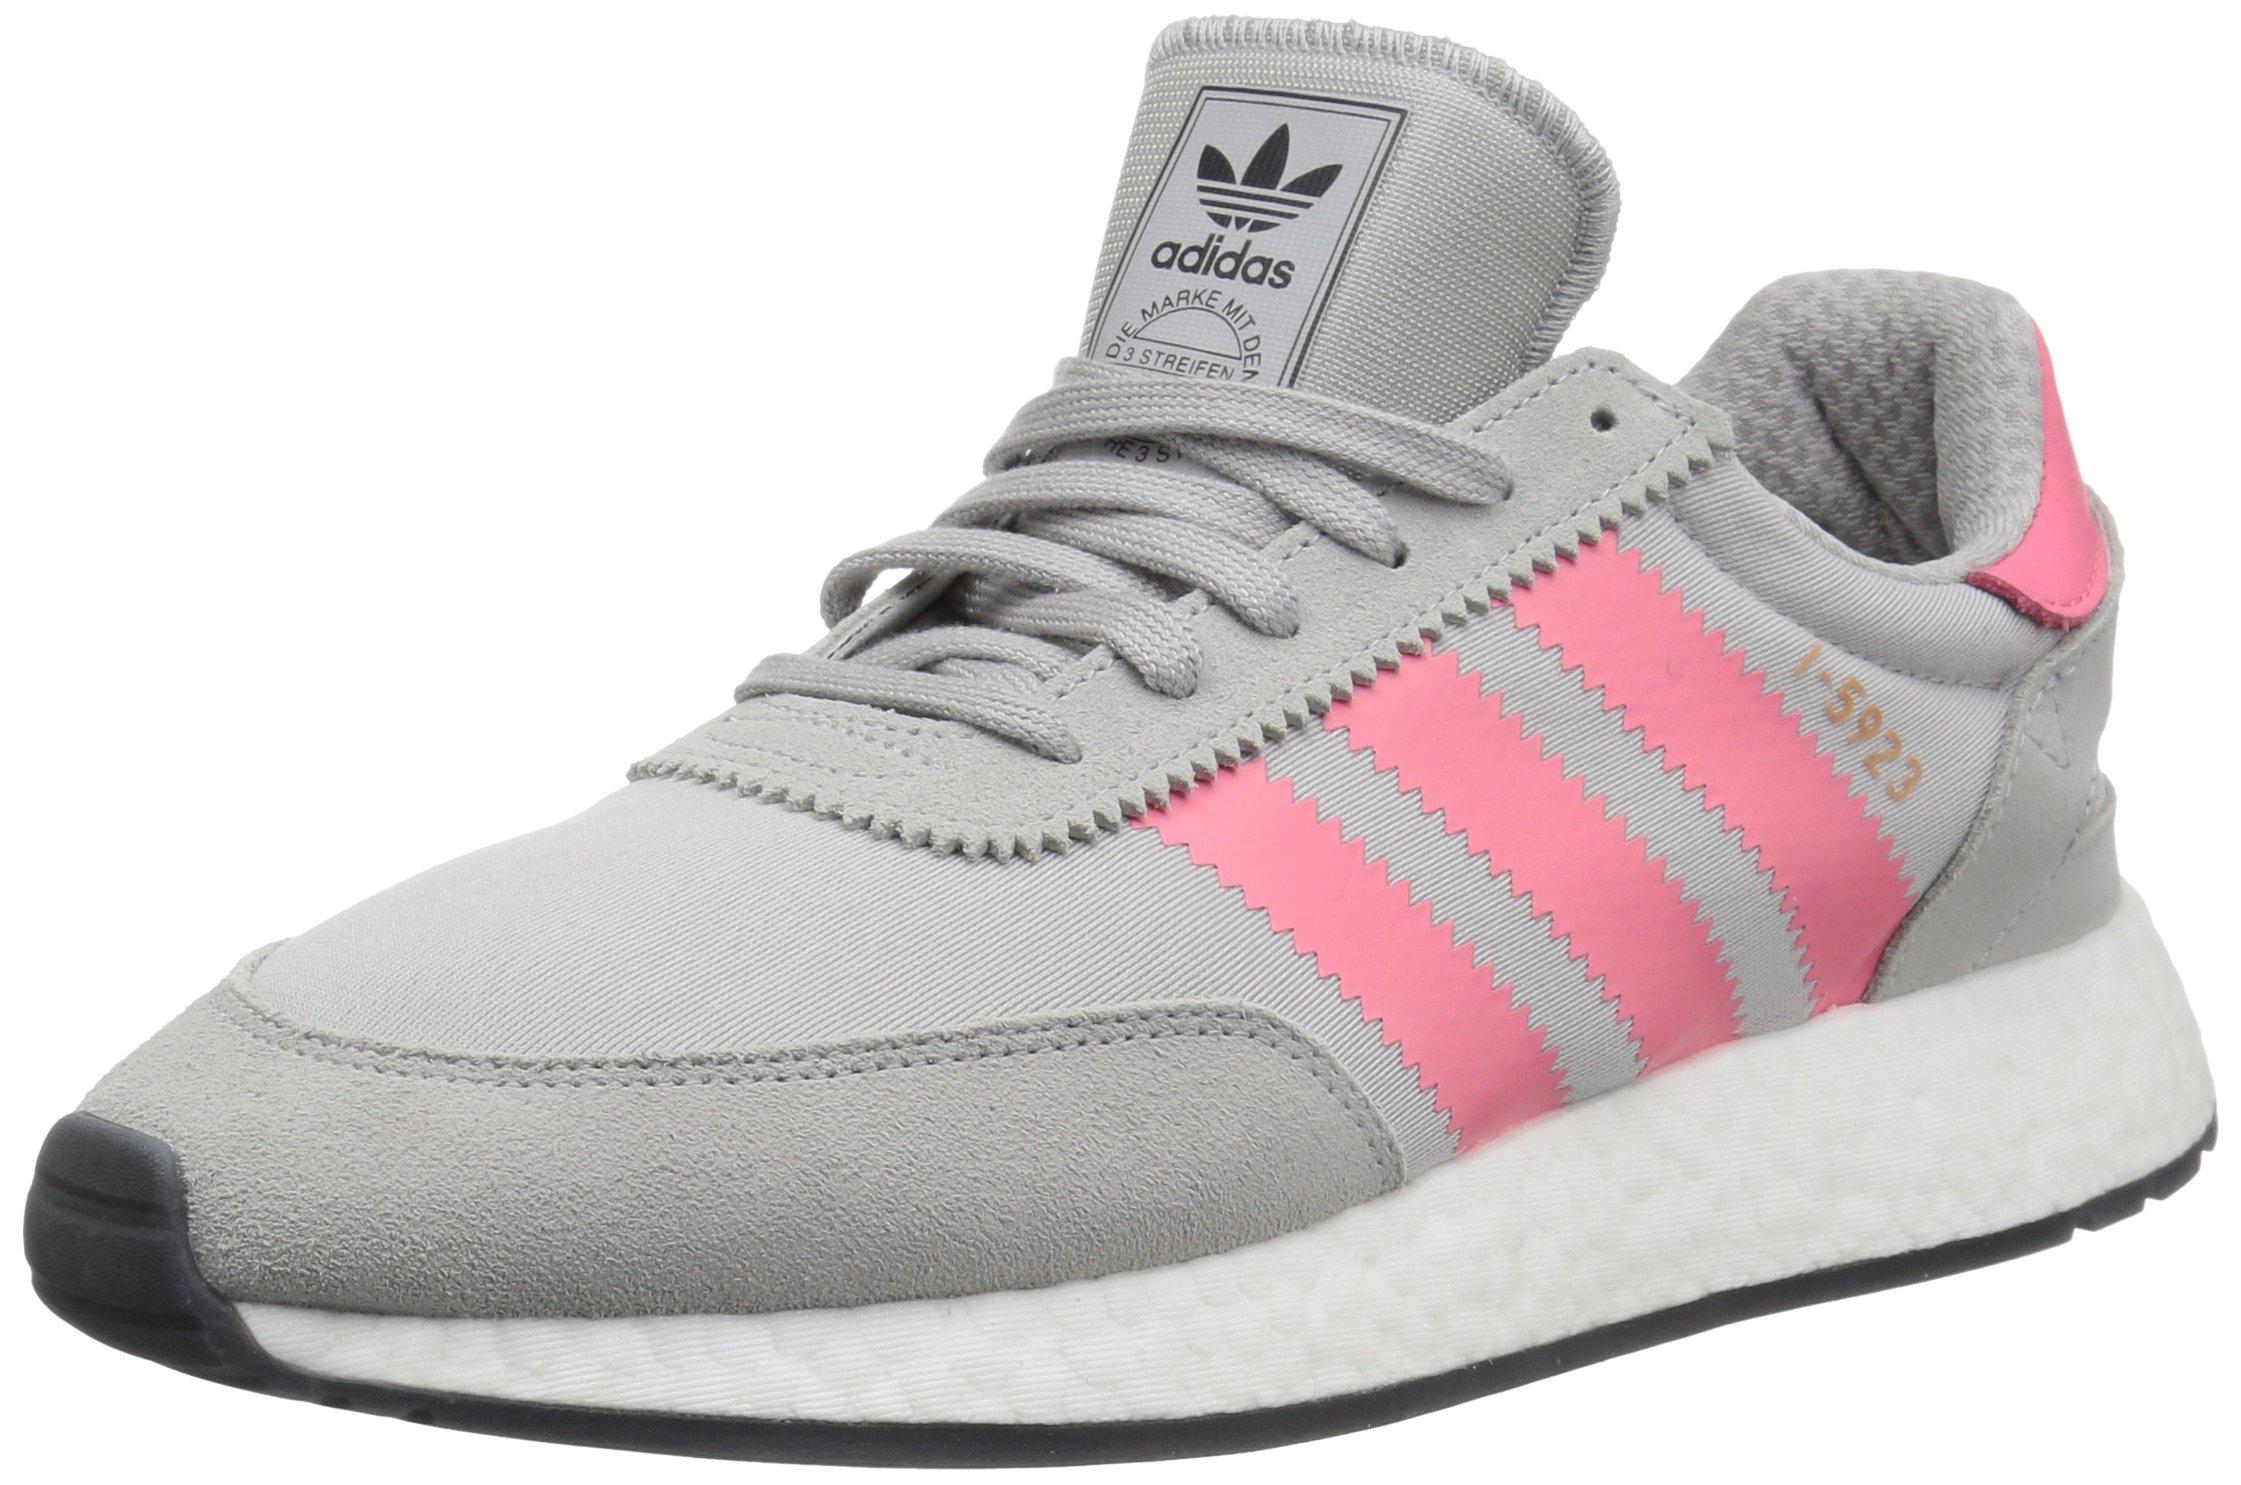 adidas Originals I-5923 Running Shoe in Grey/Chalk Pink/Black (Gray ...